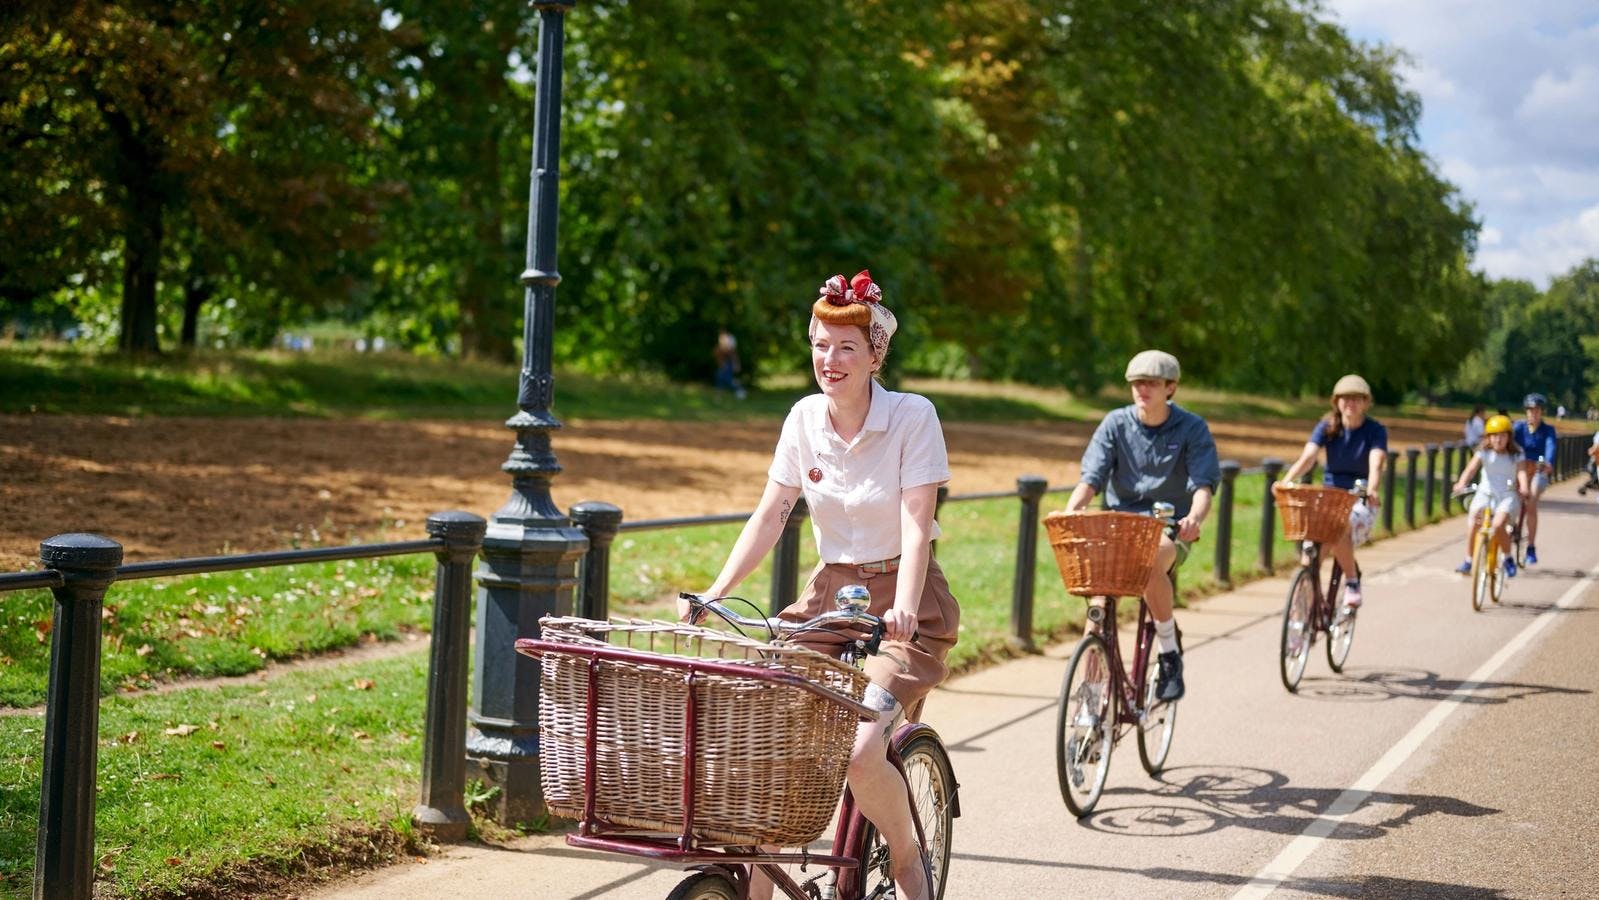 London Bike Tour in Hyde Park